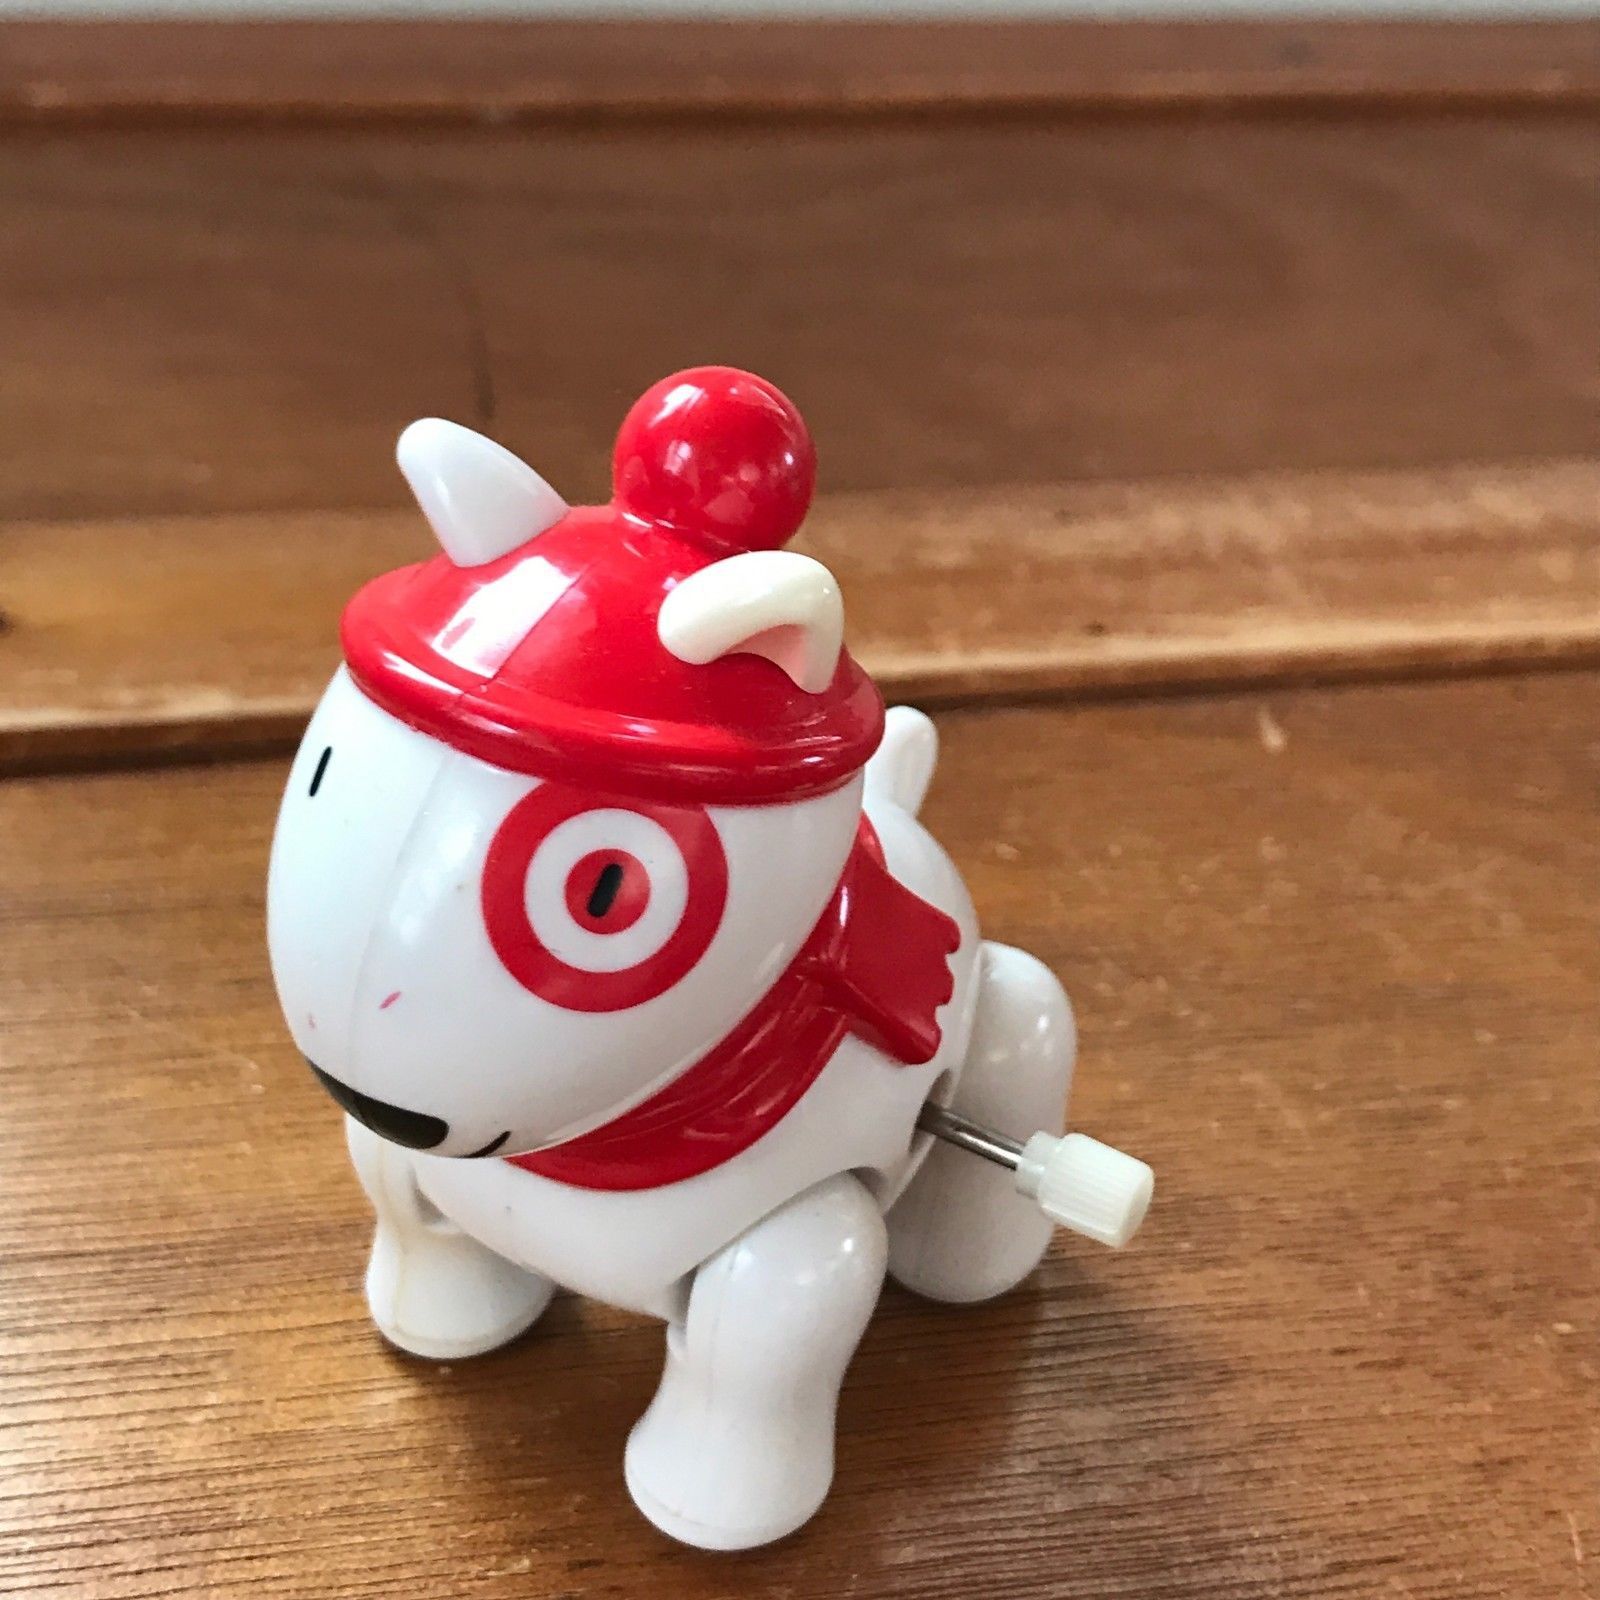 Wind Up Toys Target - mini figures roblox target inventory checker brickseek